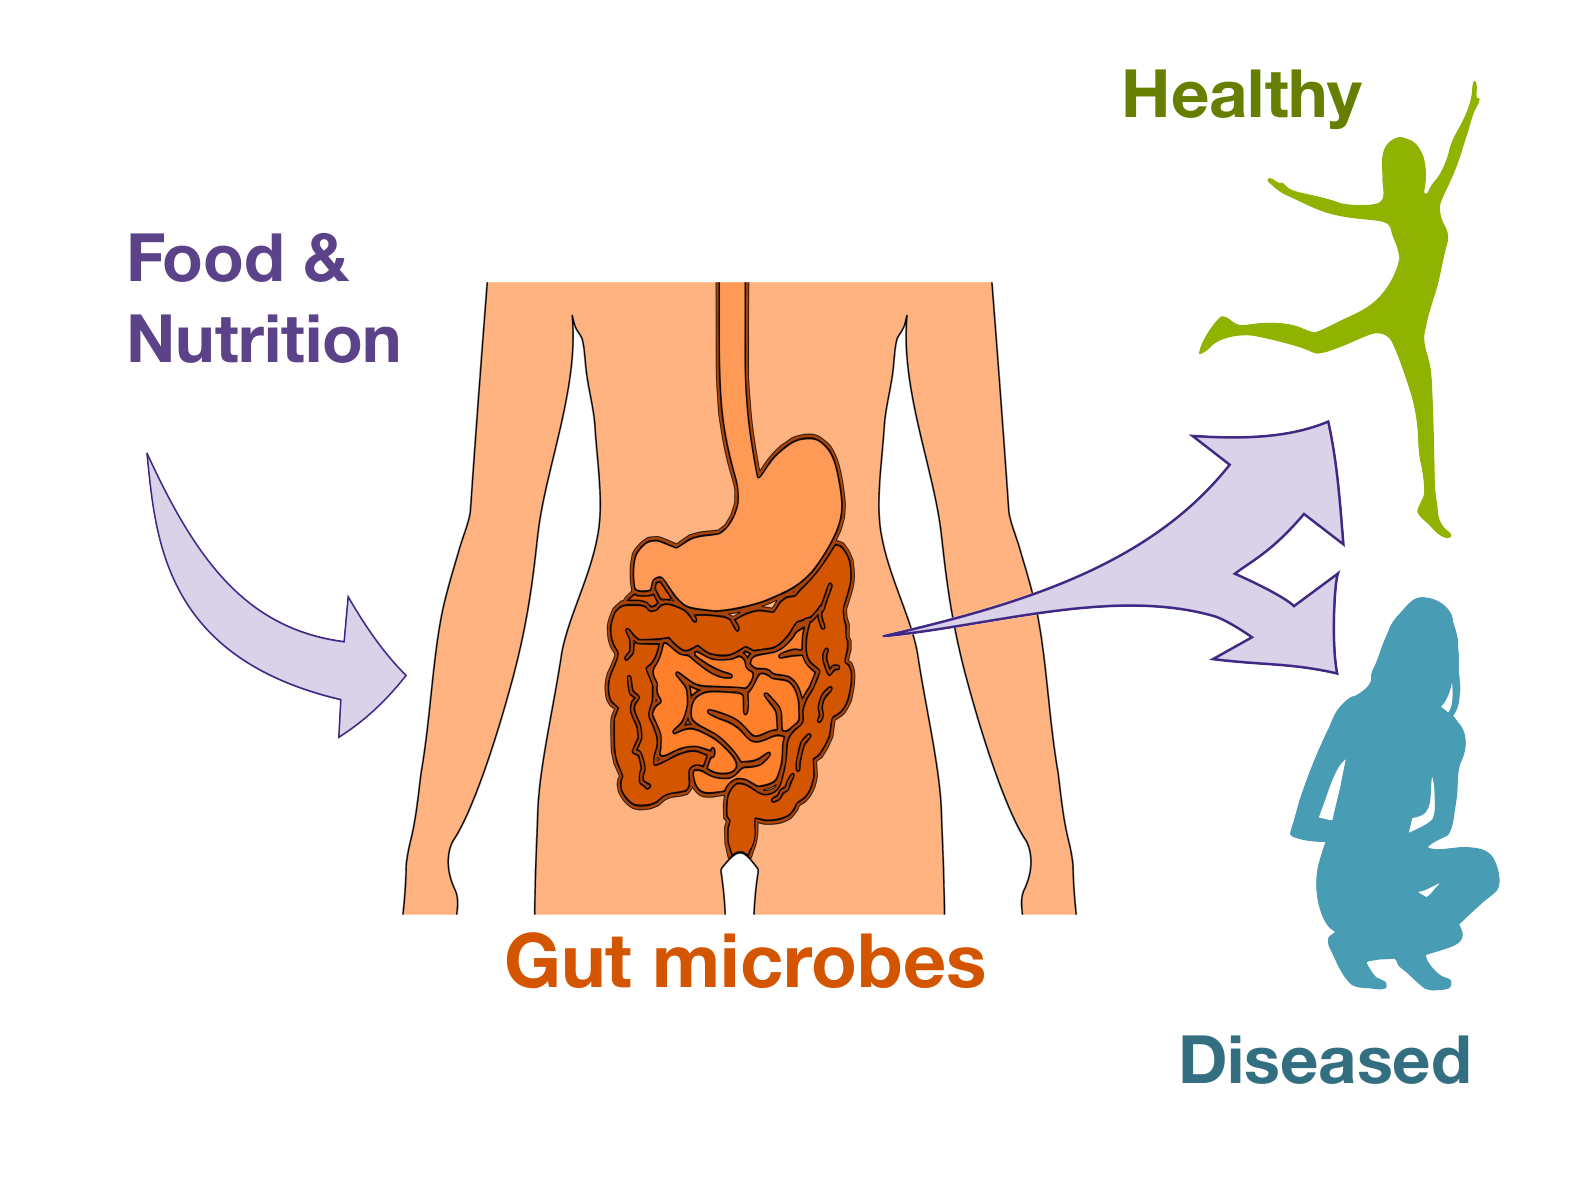 Food & Nutrition > gut microbes > human health